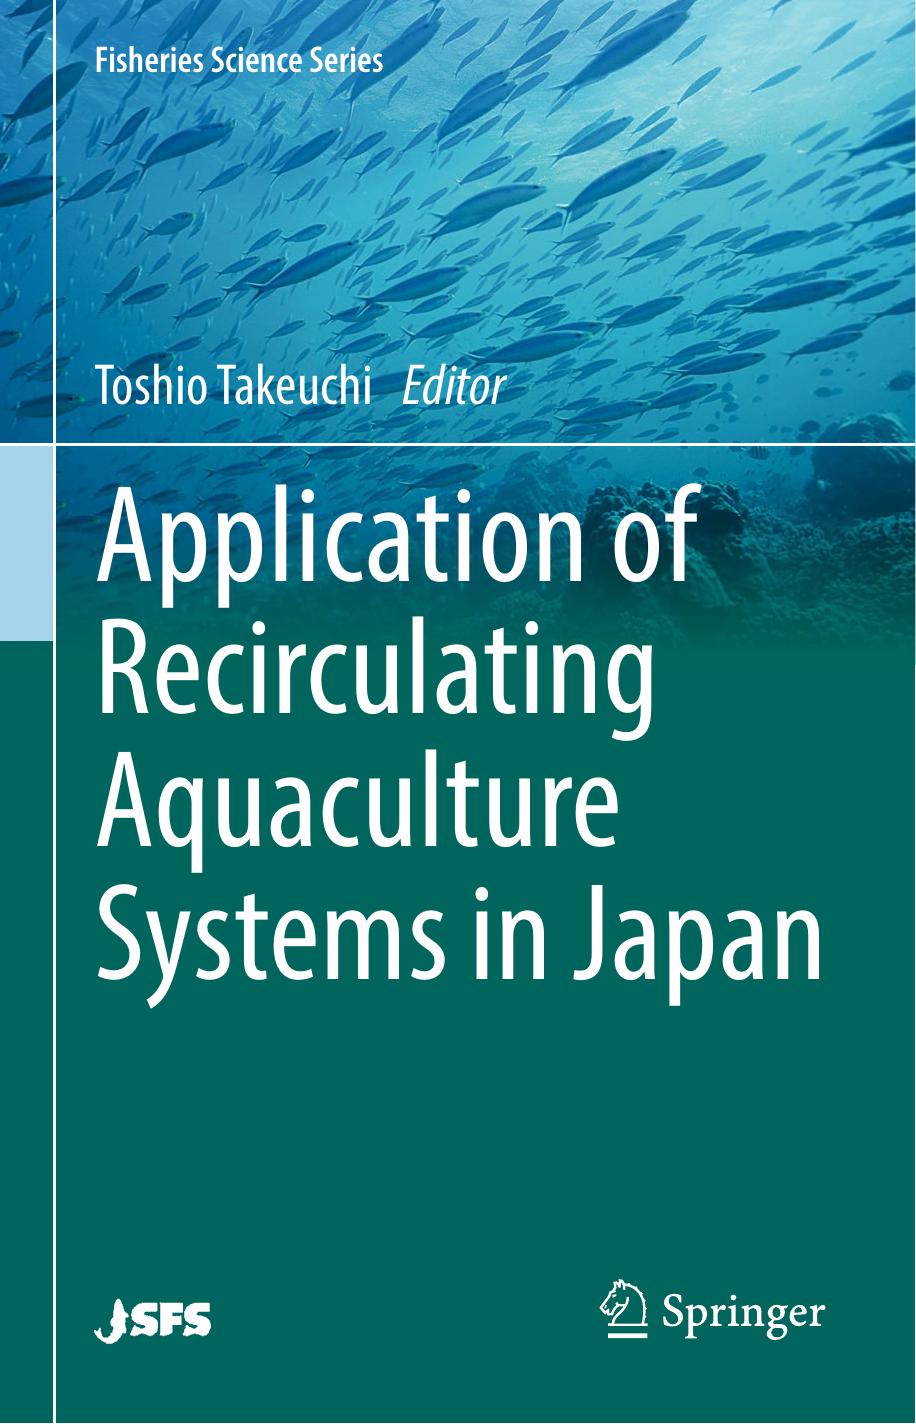 Application of Recirculating Aquaculture Systems in Japan-Springer Japan (2017)